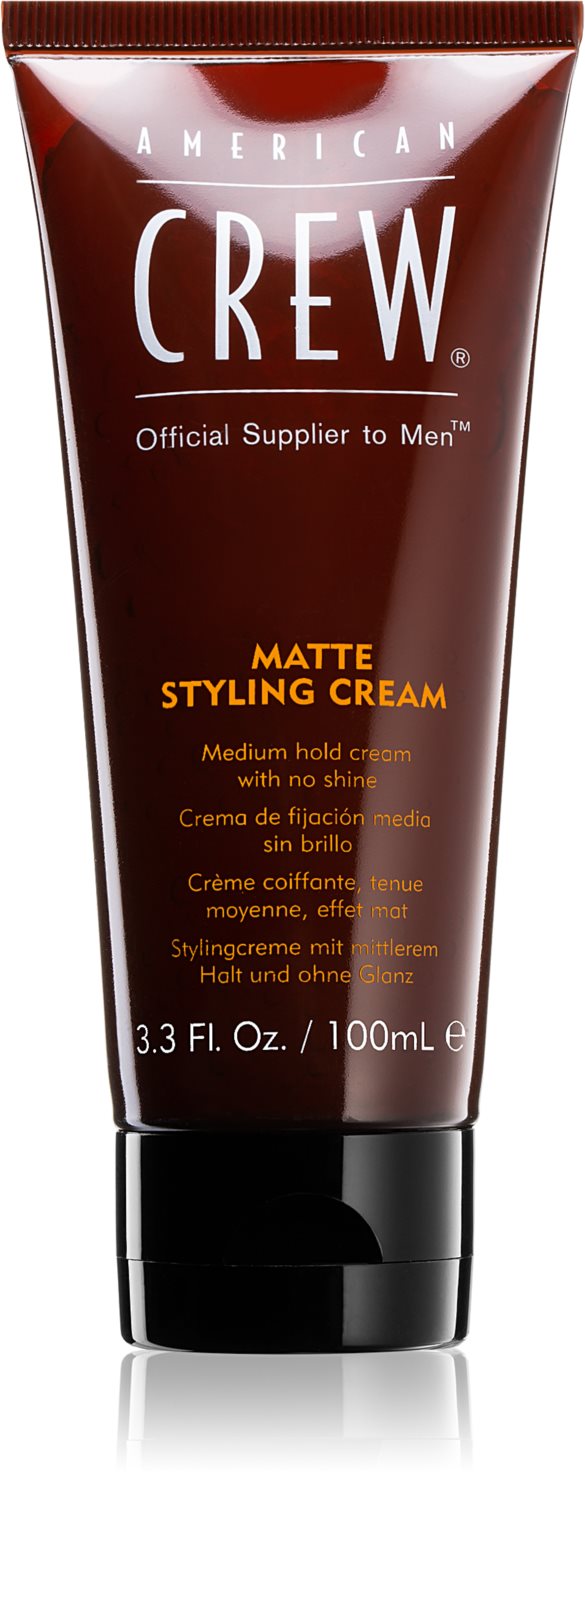 American Crew Styling Matte Styling Cream - stredne tužiaci gél s matným vzhľadom, 100 ml